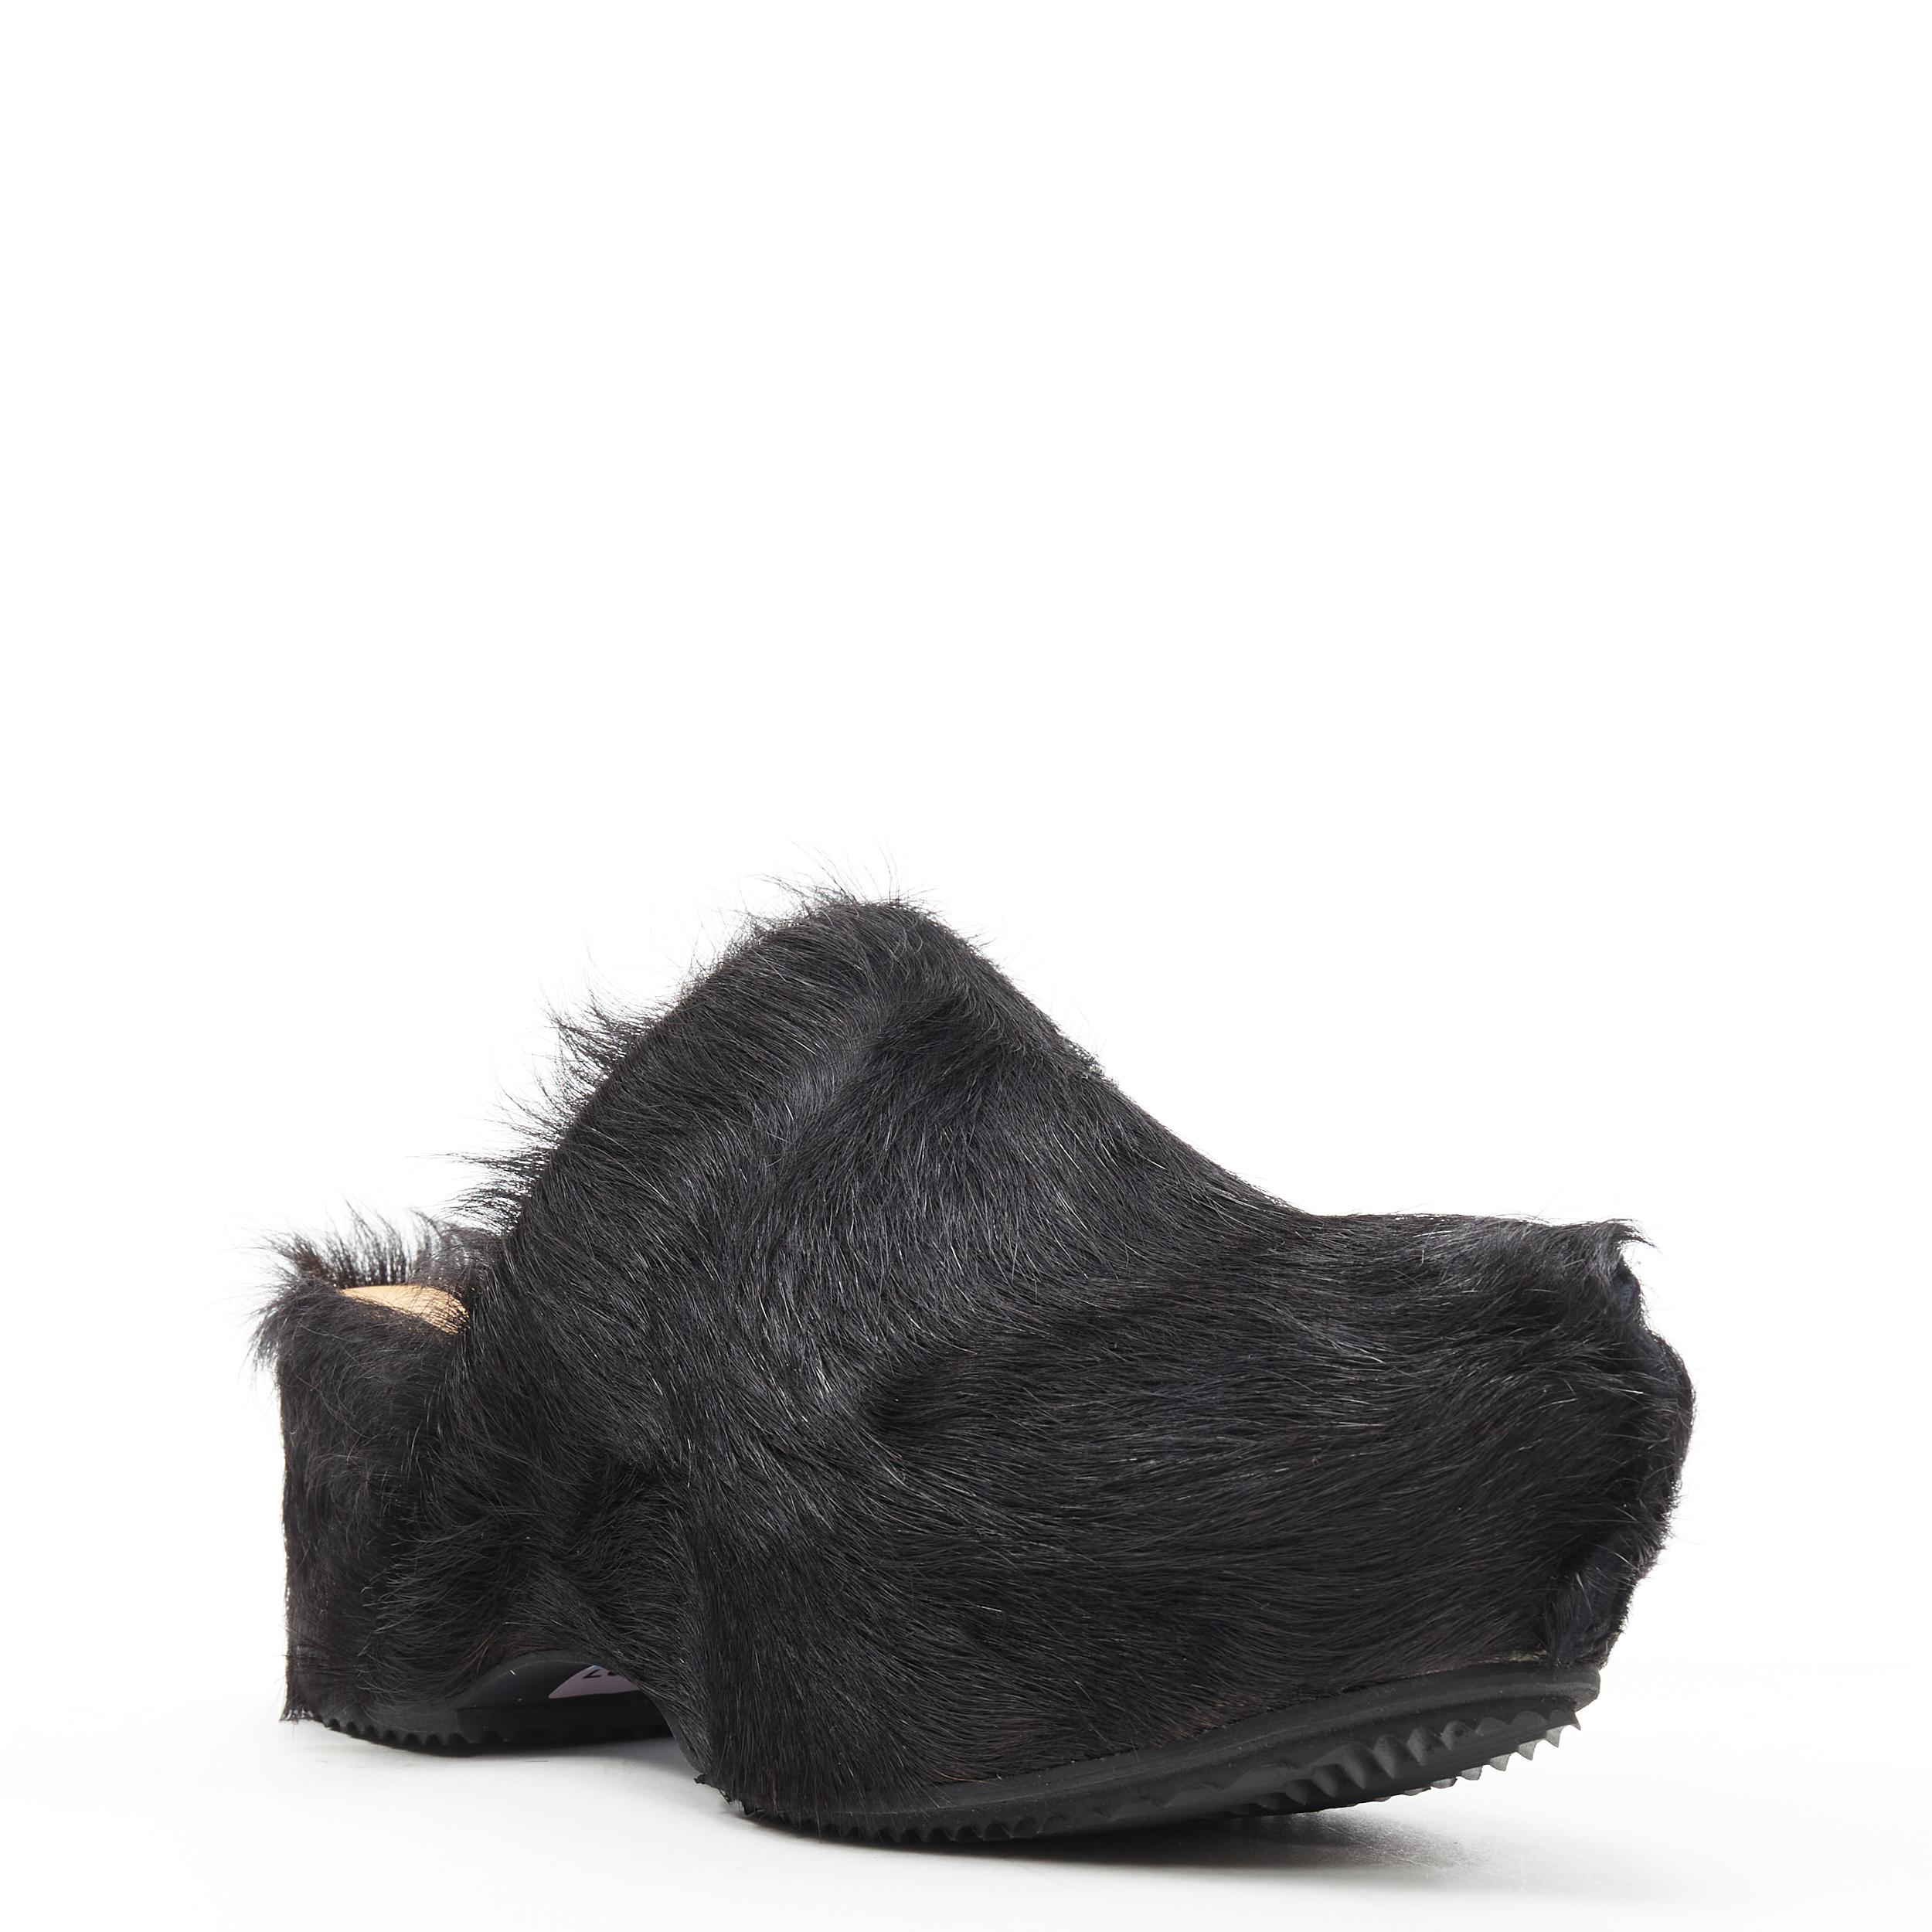 new JIL SANDER 2019 Runway Rare black ponyhair fur platform clog mule shoes EU37 
Reference: TGAS/B01240 
Brand: Jil Sander 
Model: Fur clogs 
Material: Fur
Color: Black 
Pattern: Solid 
Extra Detail: Fur covered platform clogs. 
Estimated Retail